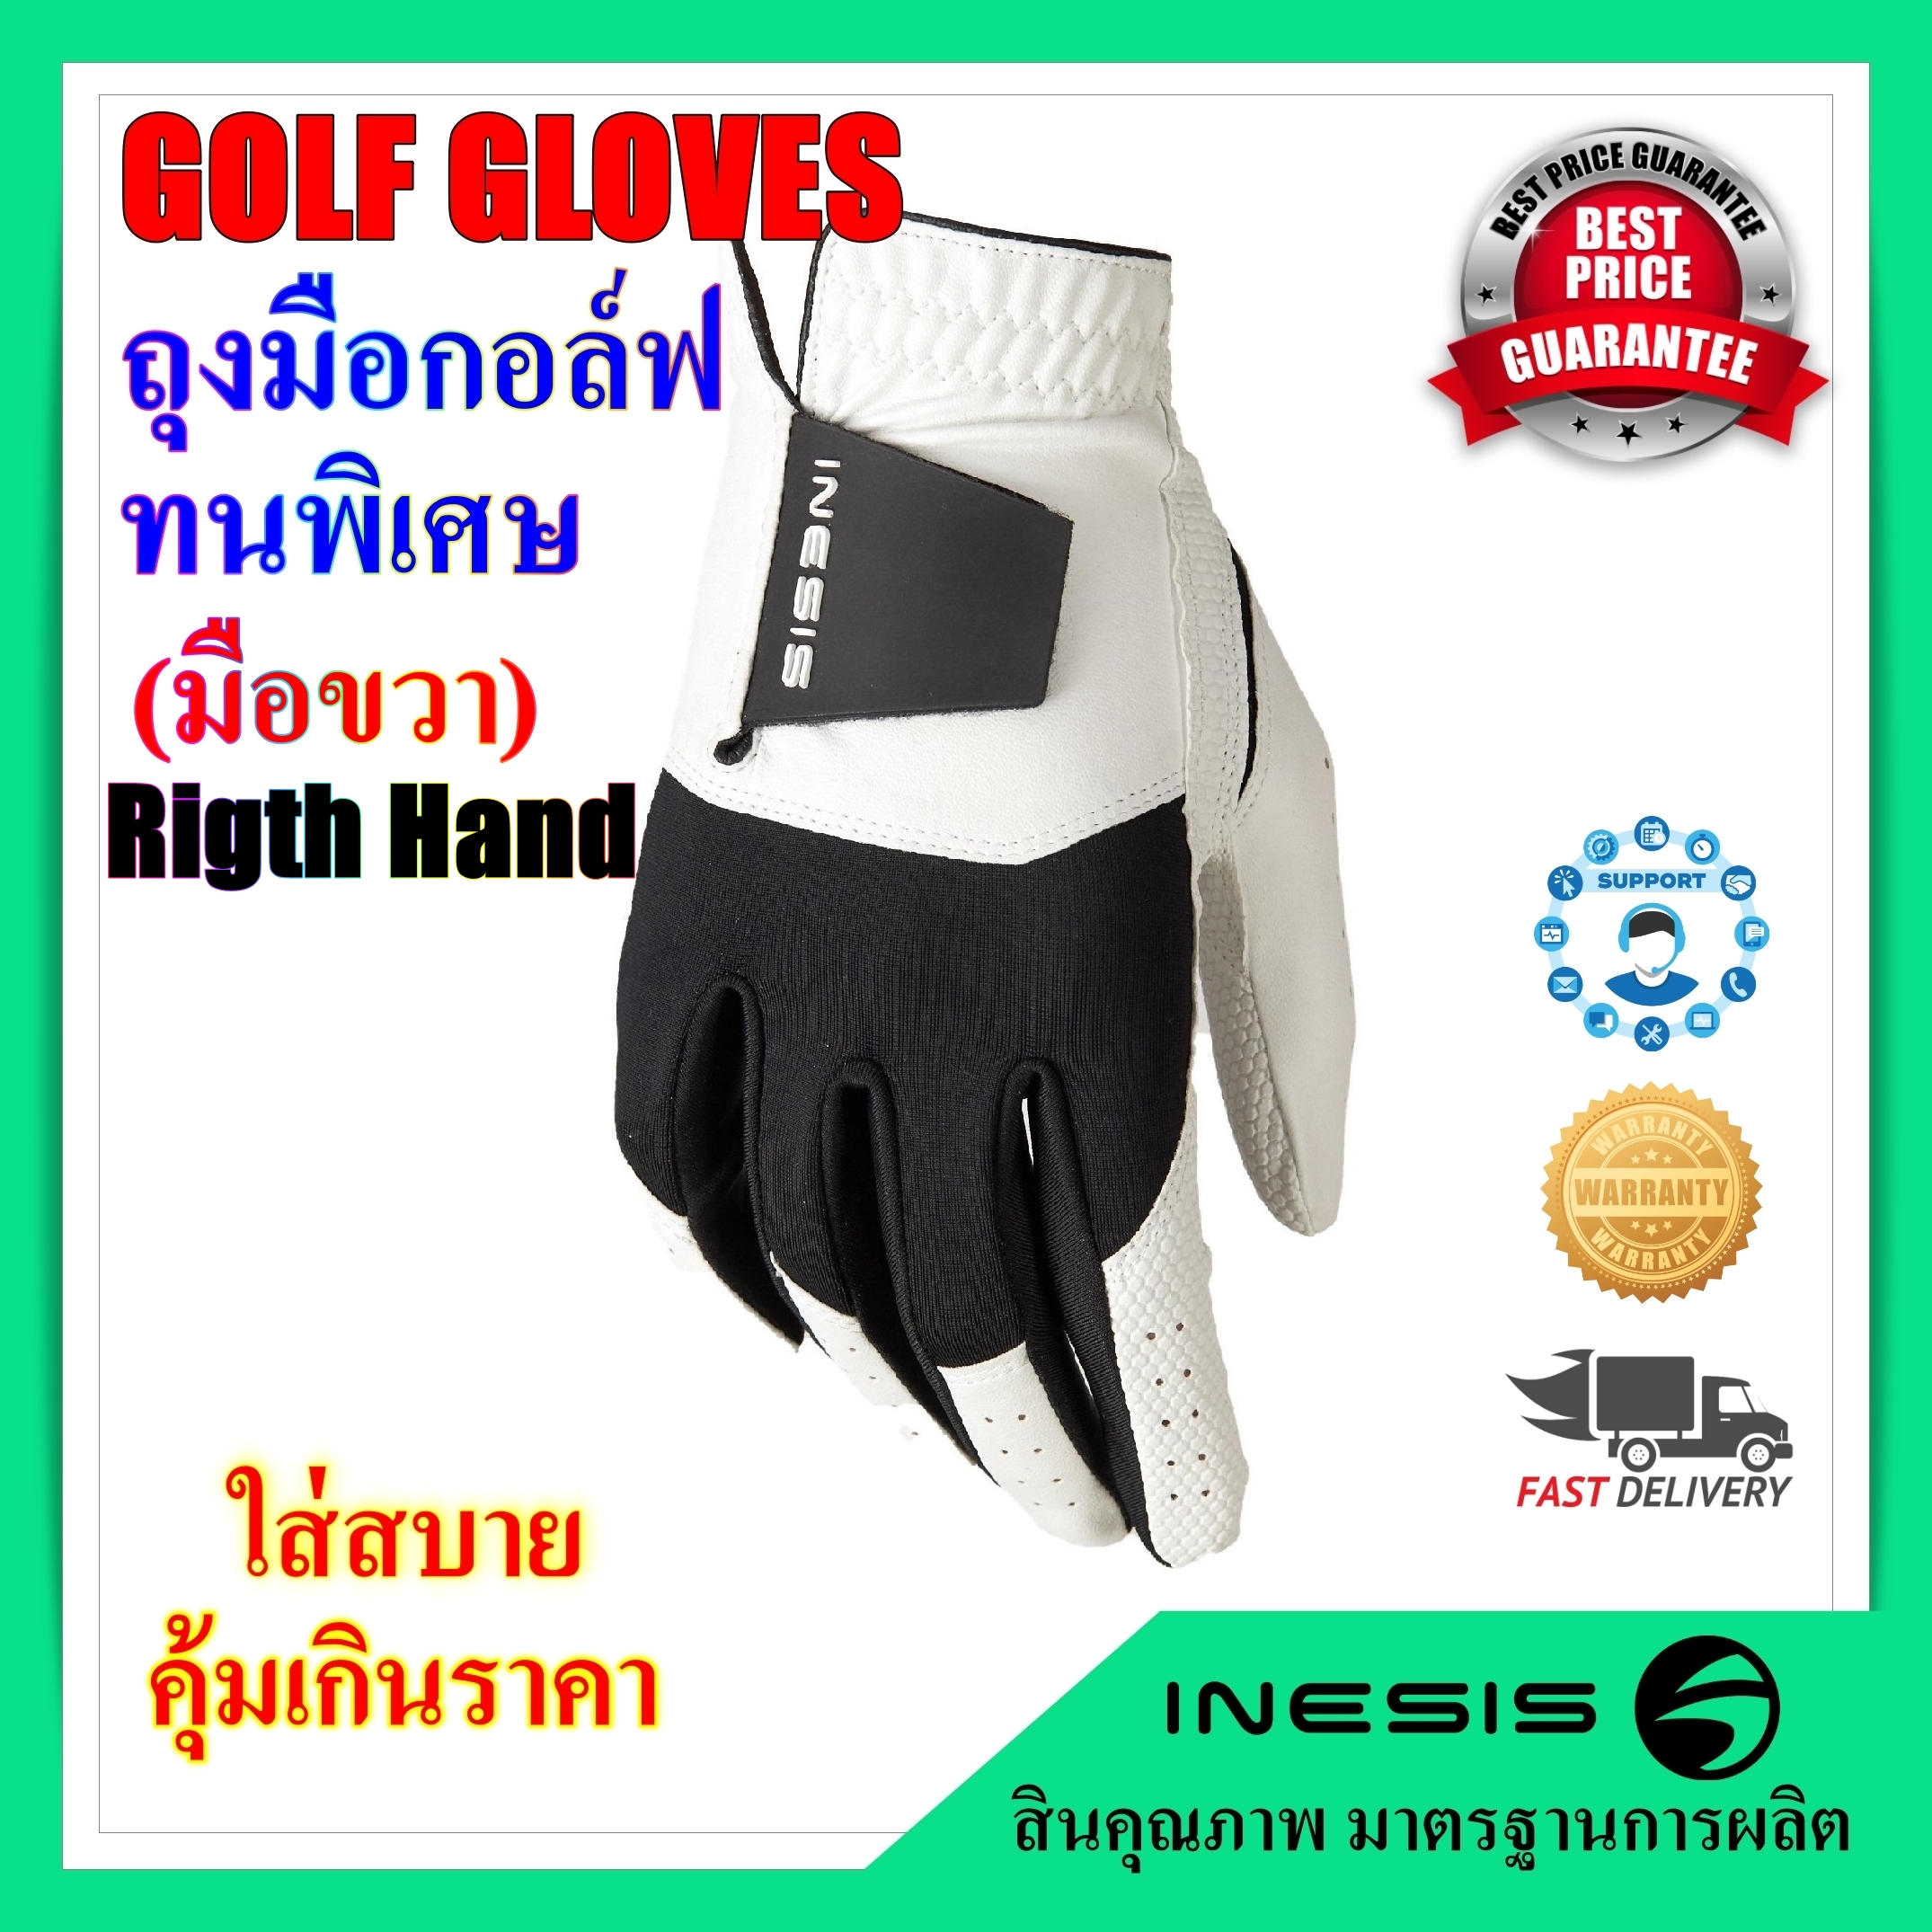 Golf Gloves ถุงมือกอล์ฟ ทนทานกว่าปกติ INESIS 100 Right Hand (มือขวา)